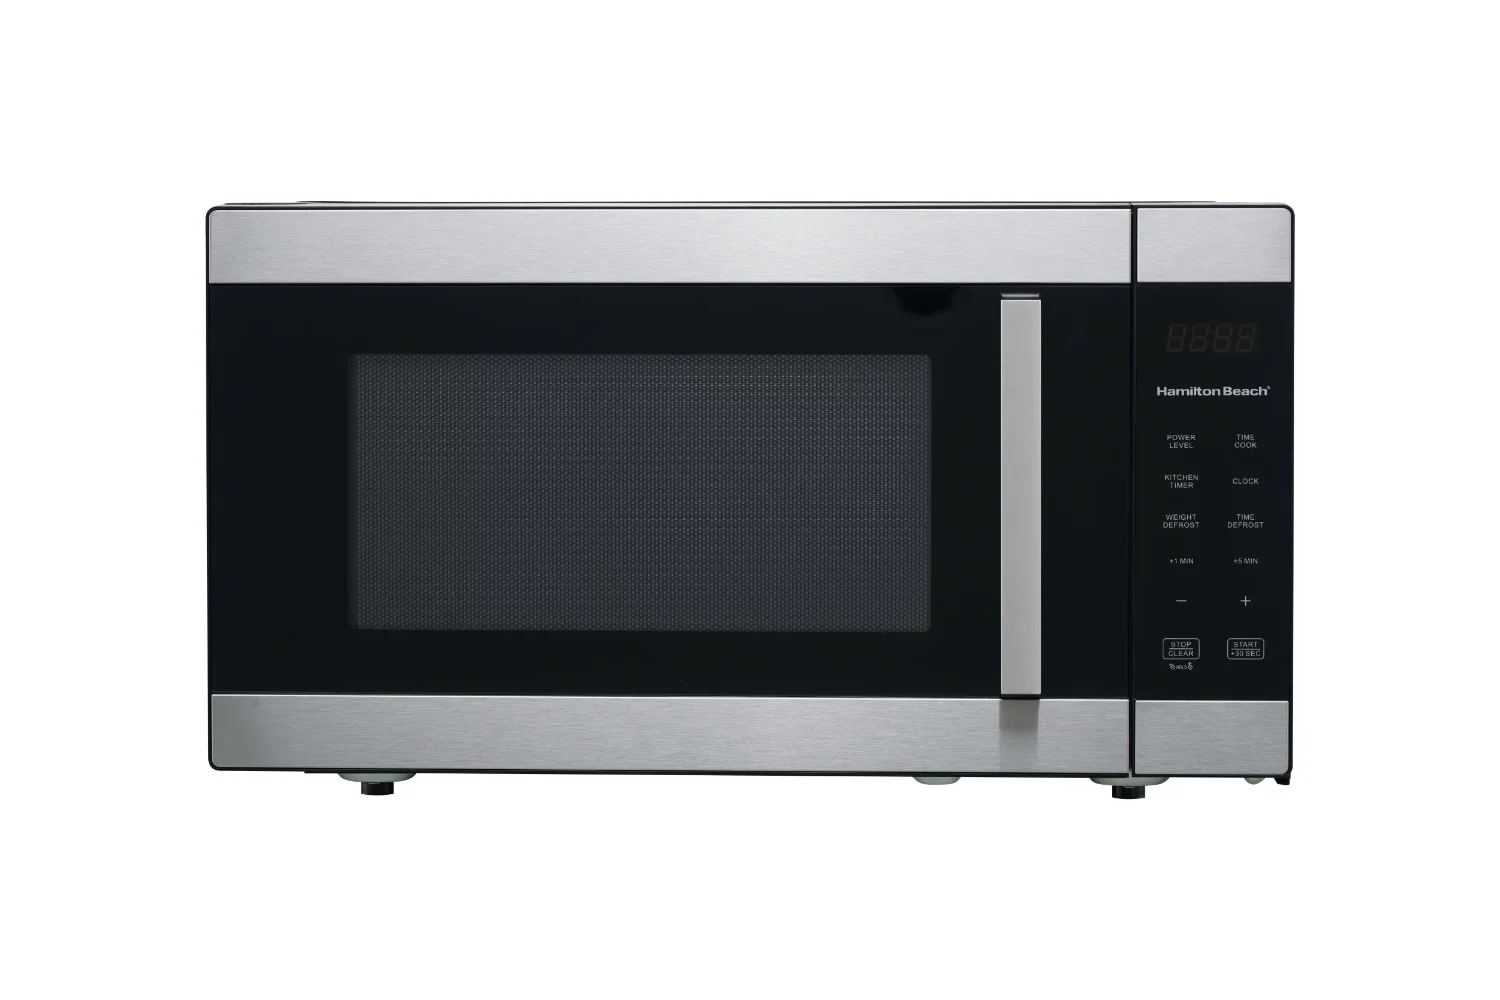 1.6 cu. ft. Sensor Cook Countertop Microwave Oven, 1100 Watts, Stainless Steel